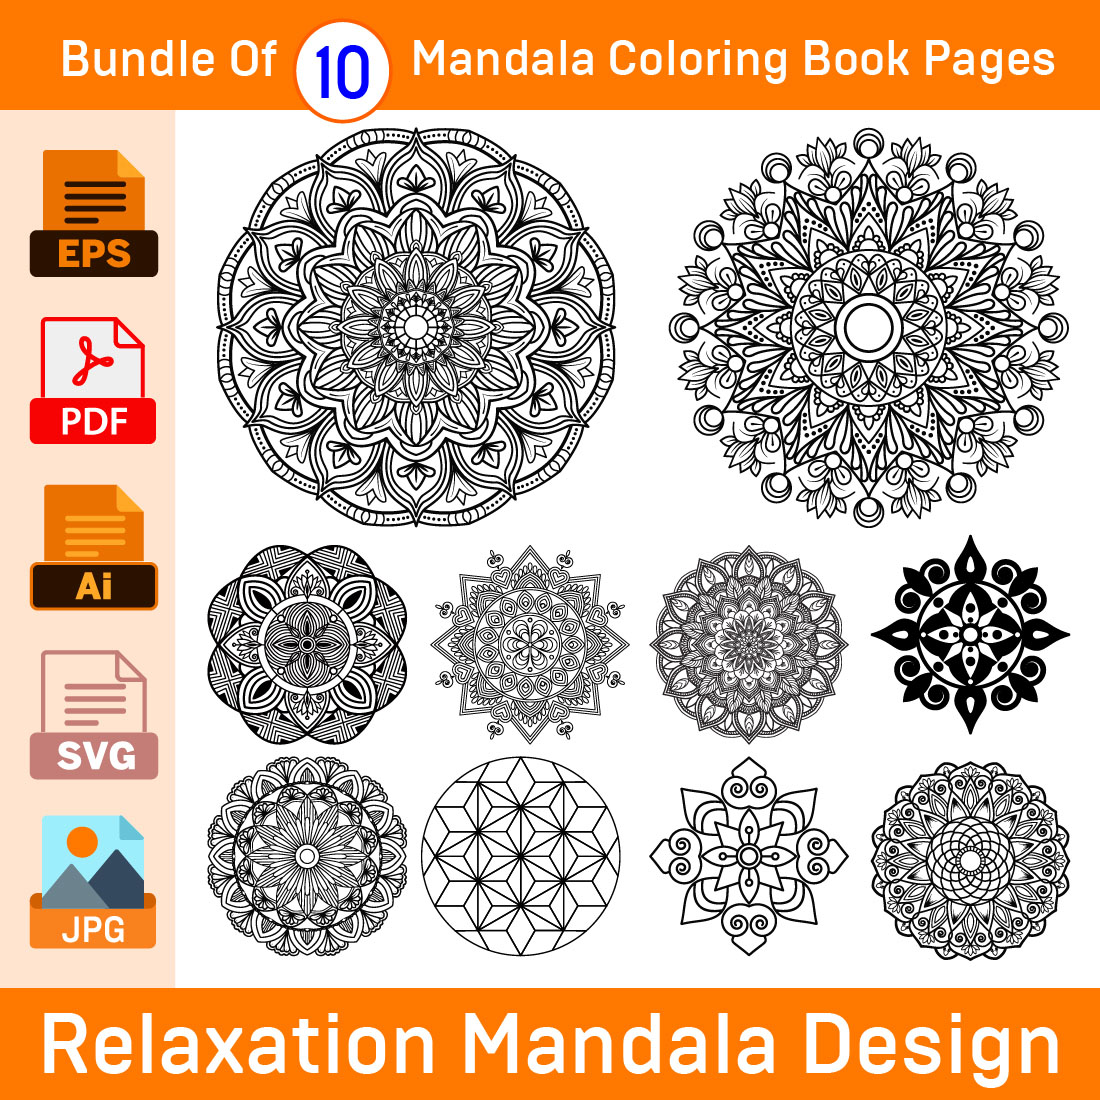 Bundle of 10 Relaxation Mandalas Coloring Book Pages - MasterBundles